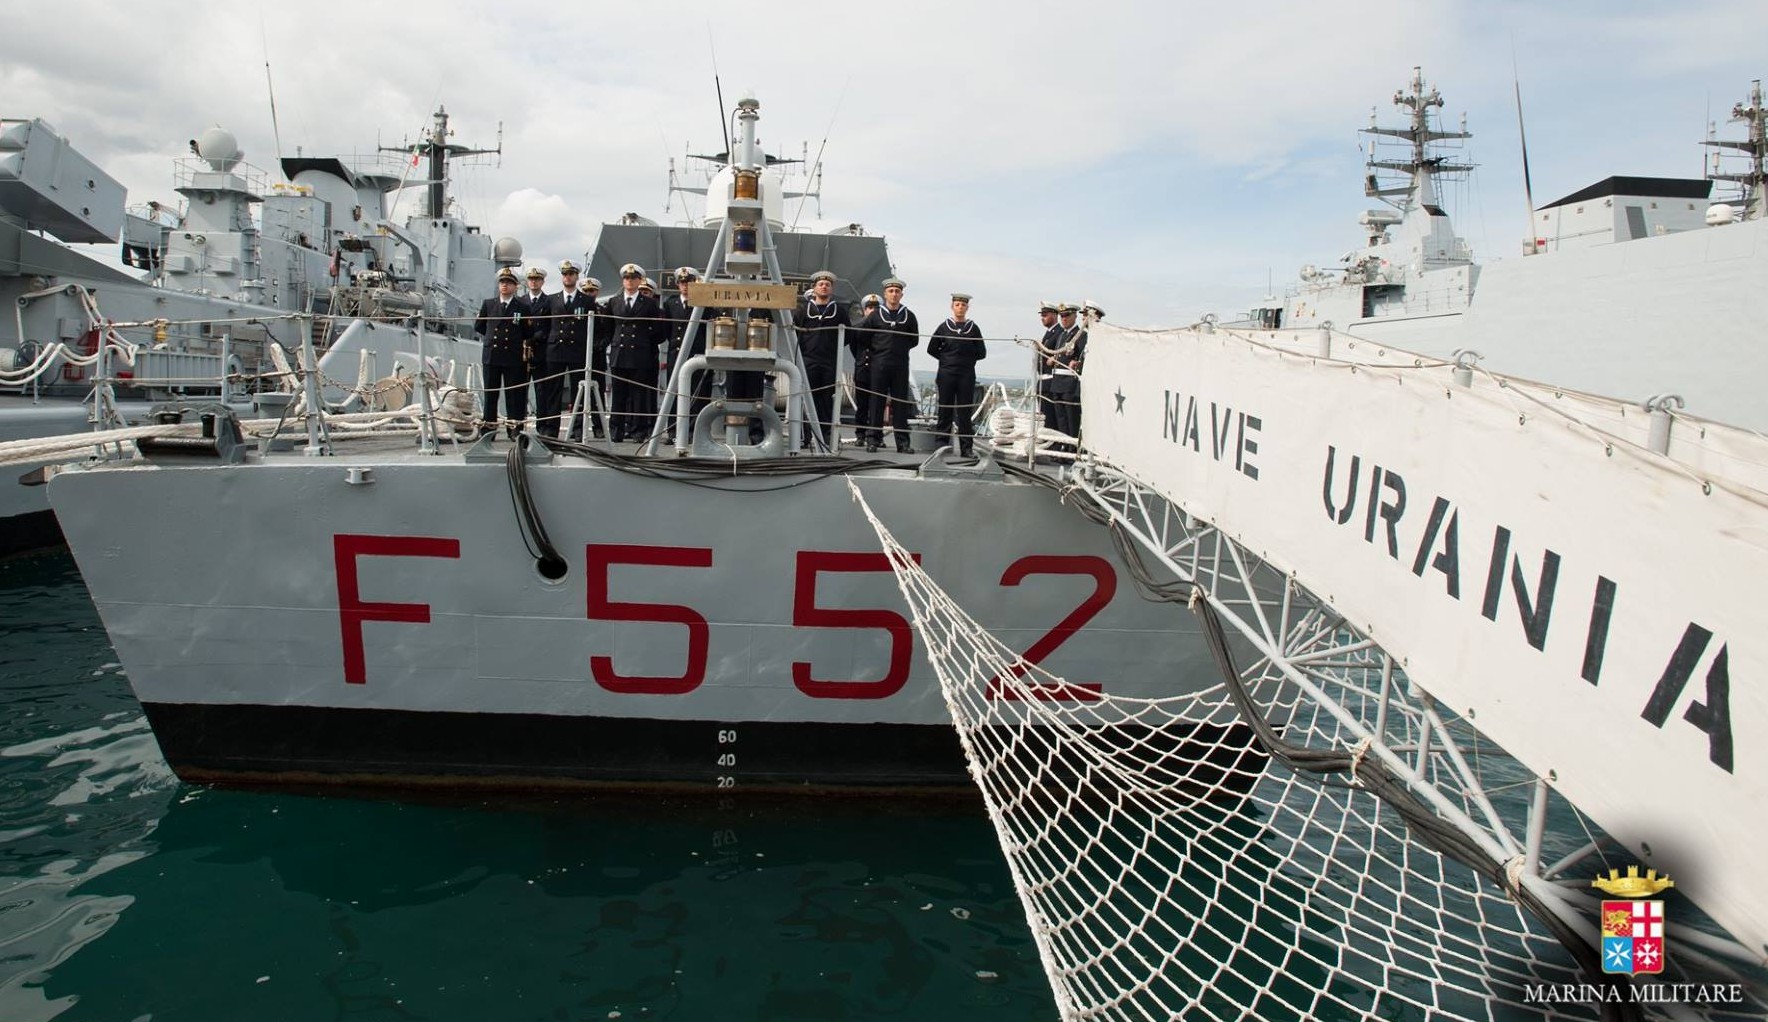 f-552 urania nave its minerva class corvette italian navy marina militare 19